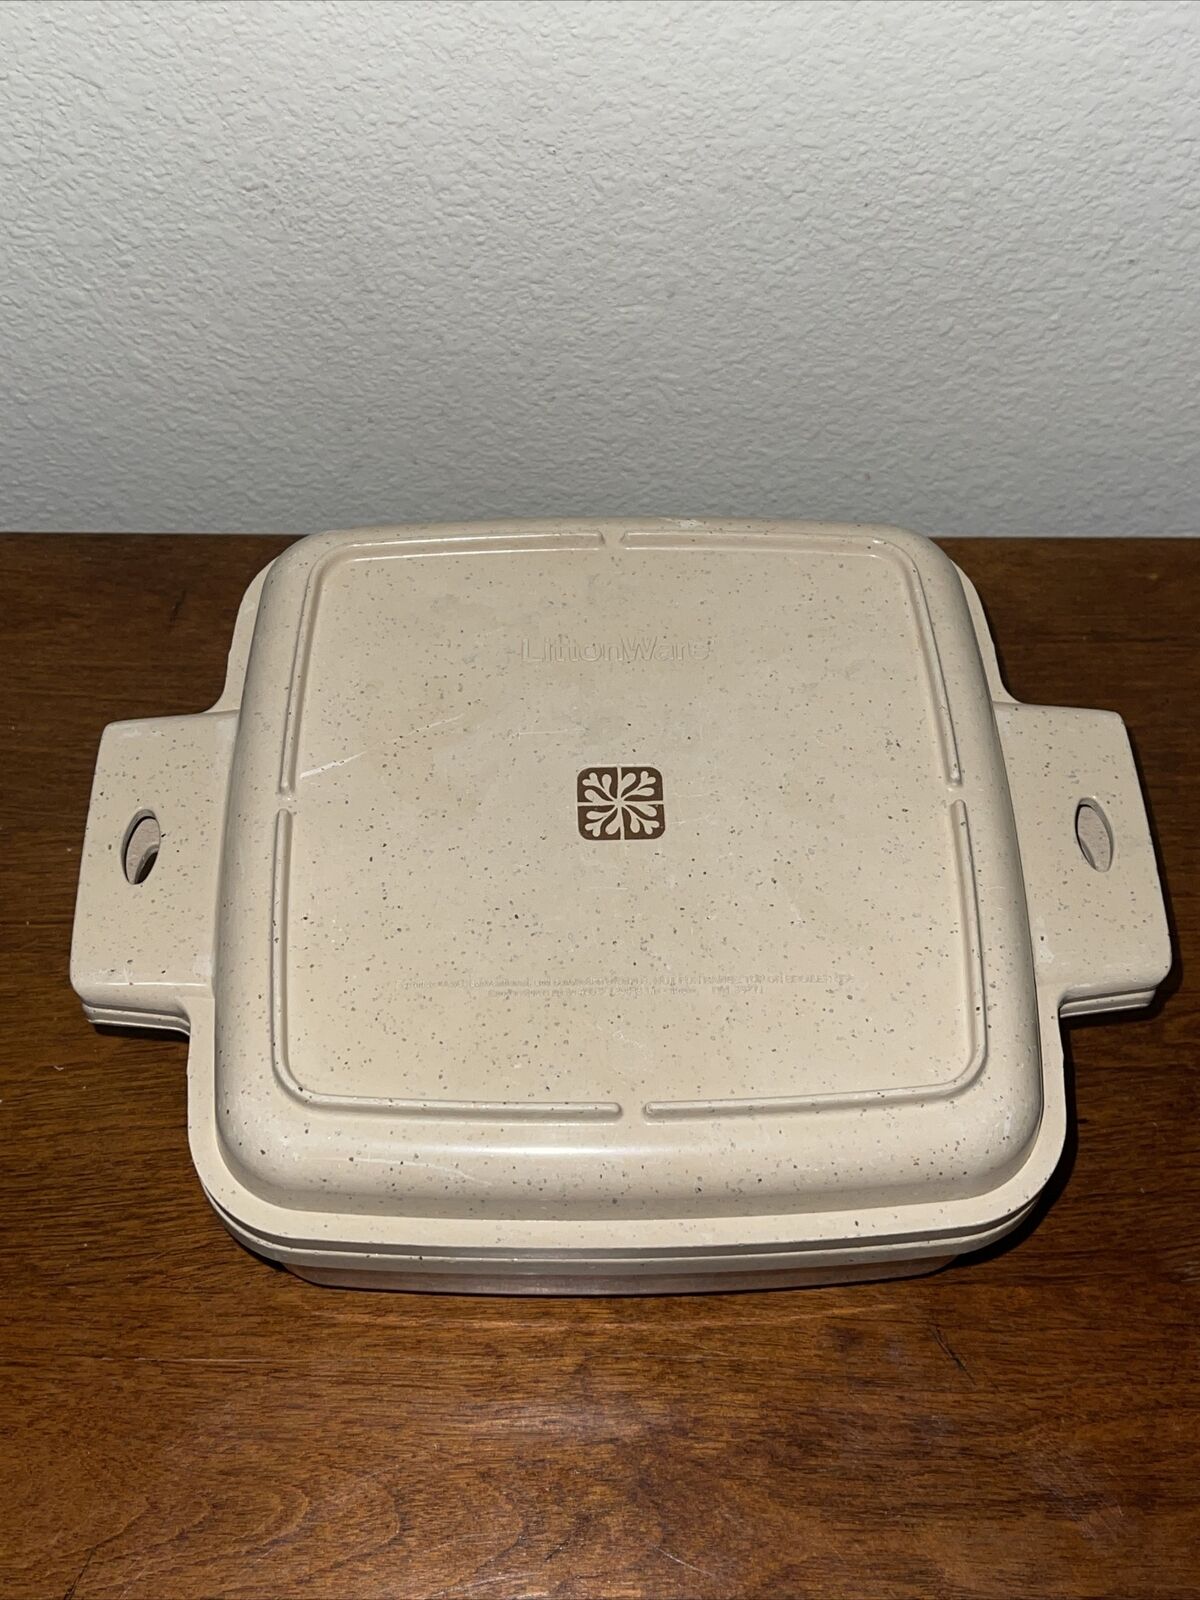 Vintage Littonware Microwave Cookware 1.5-quart Casserole - 39271/39272